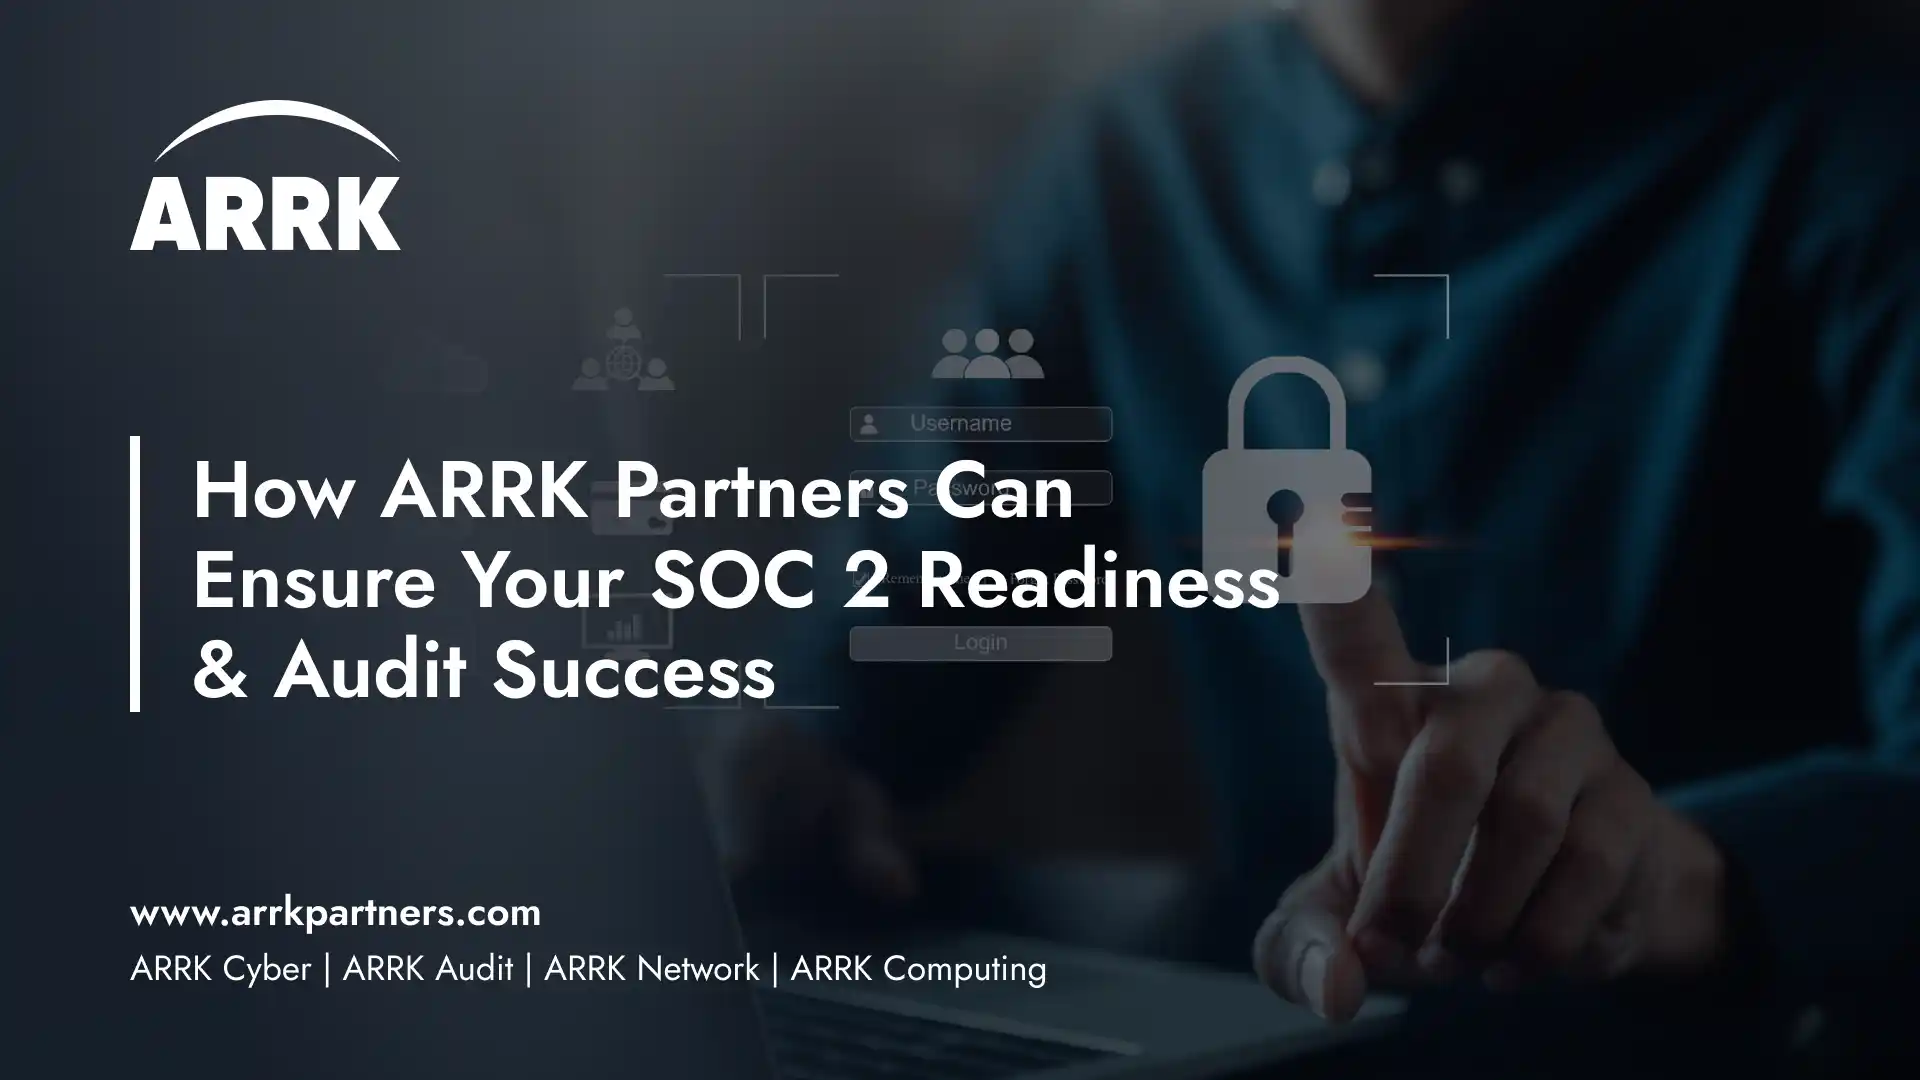 ARRK Partners Can Ensure Your SOC 2 Readiness & Audit Success